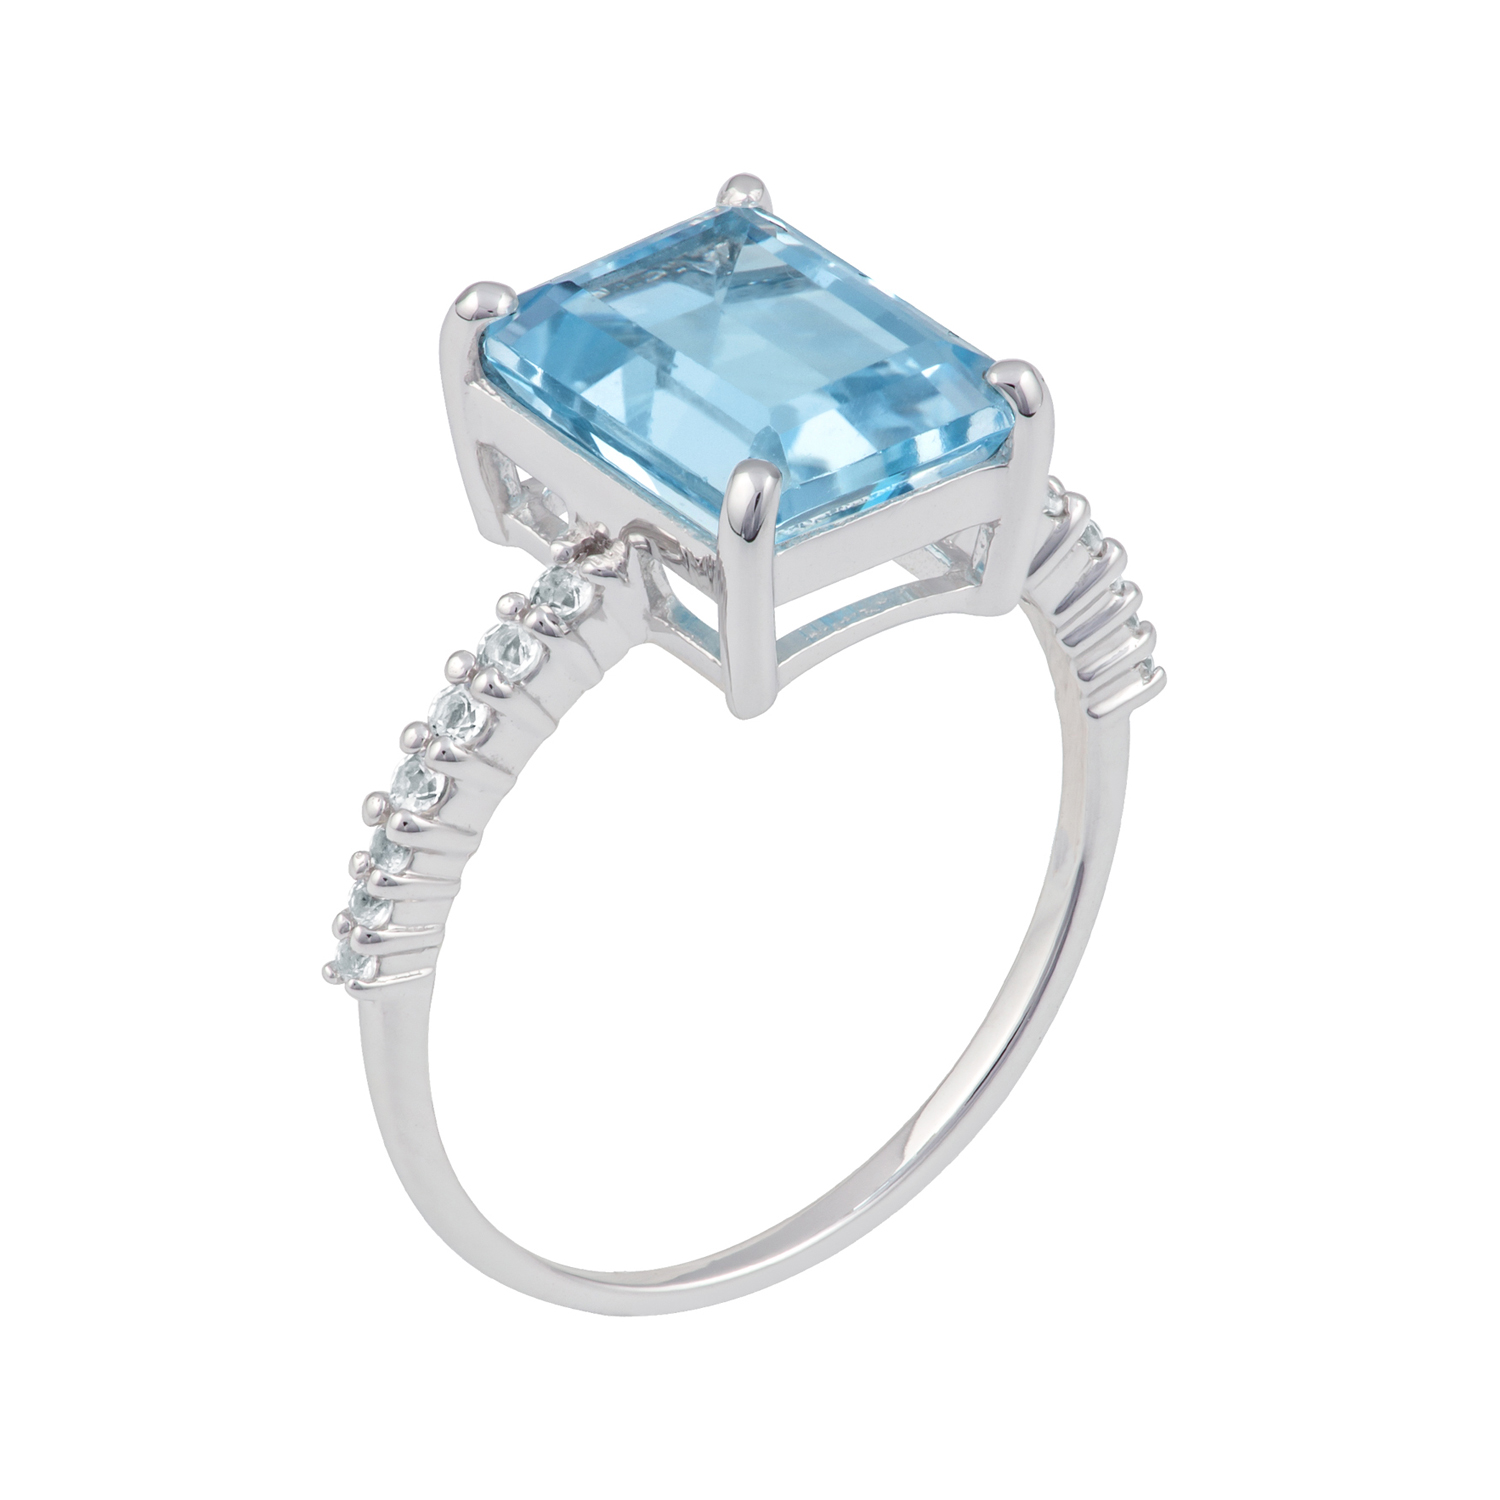 10k White Gold Emerald-Cut Blue Topaz and White Topaz Ring | eBay